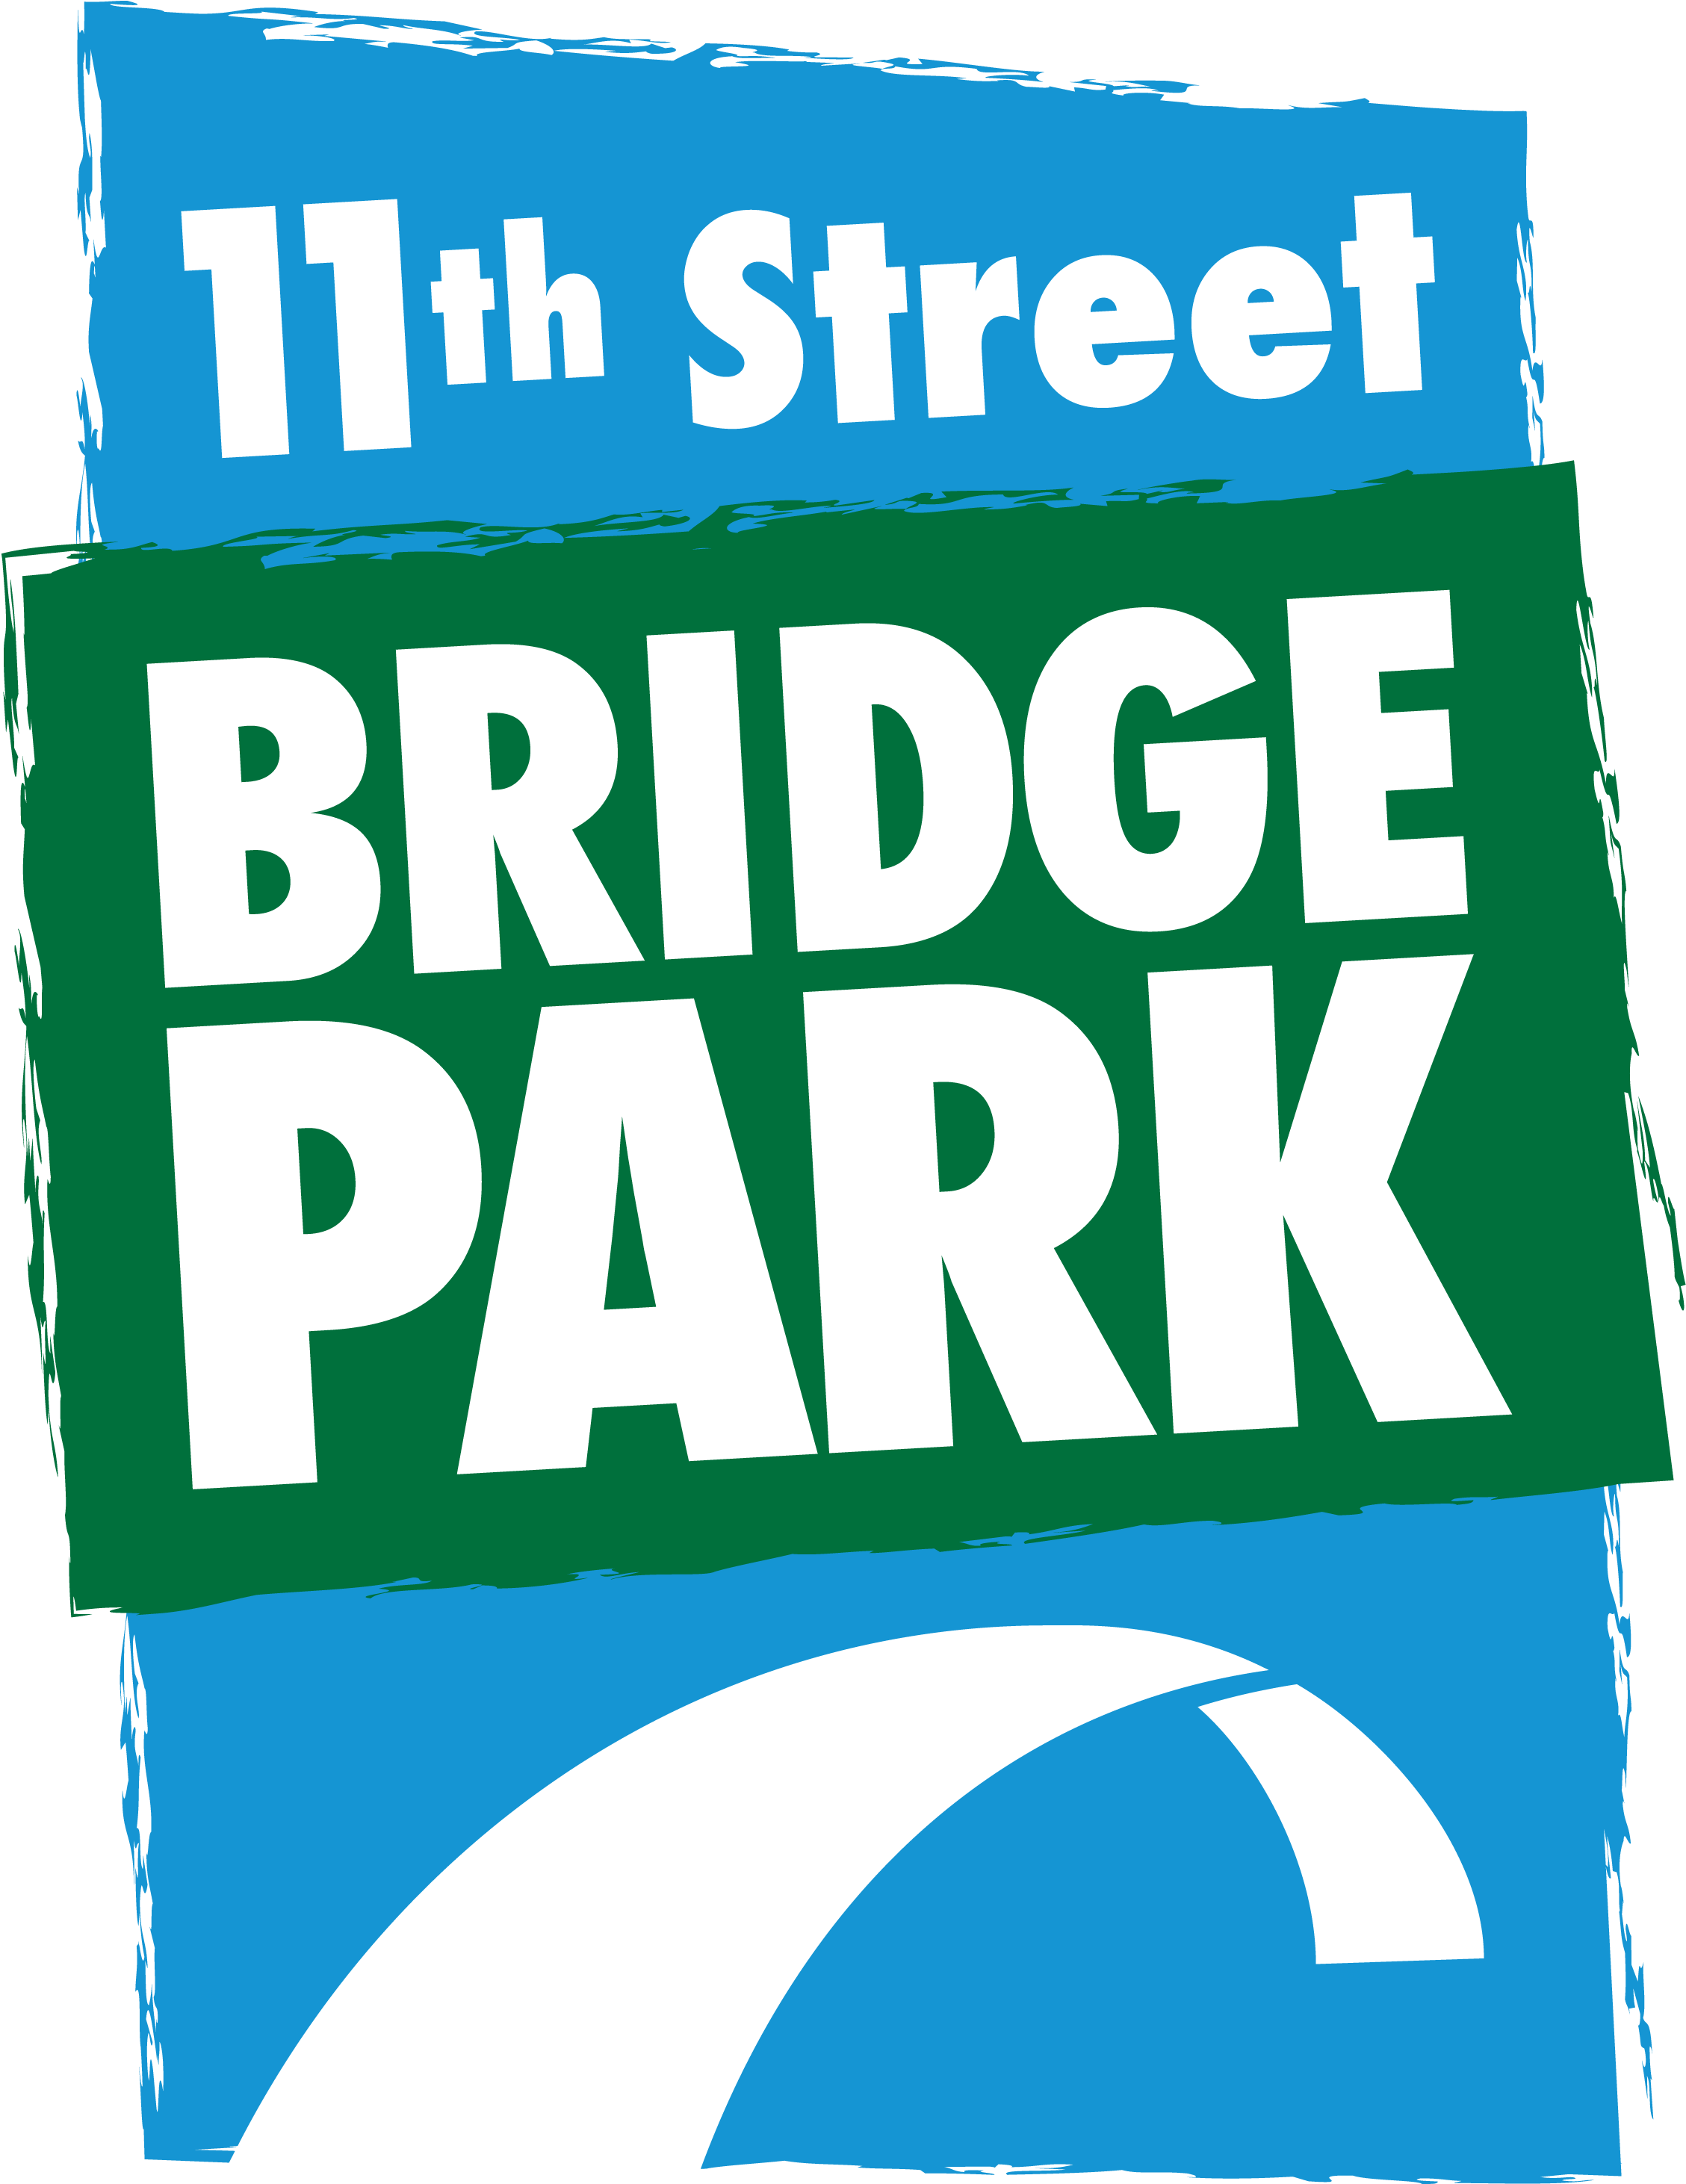 About The 11th Street Bridge Park - 11th Street Bridges (2376x3184)